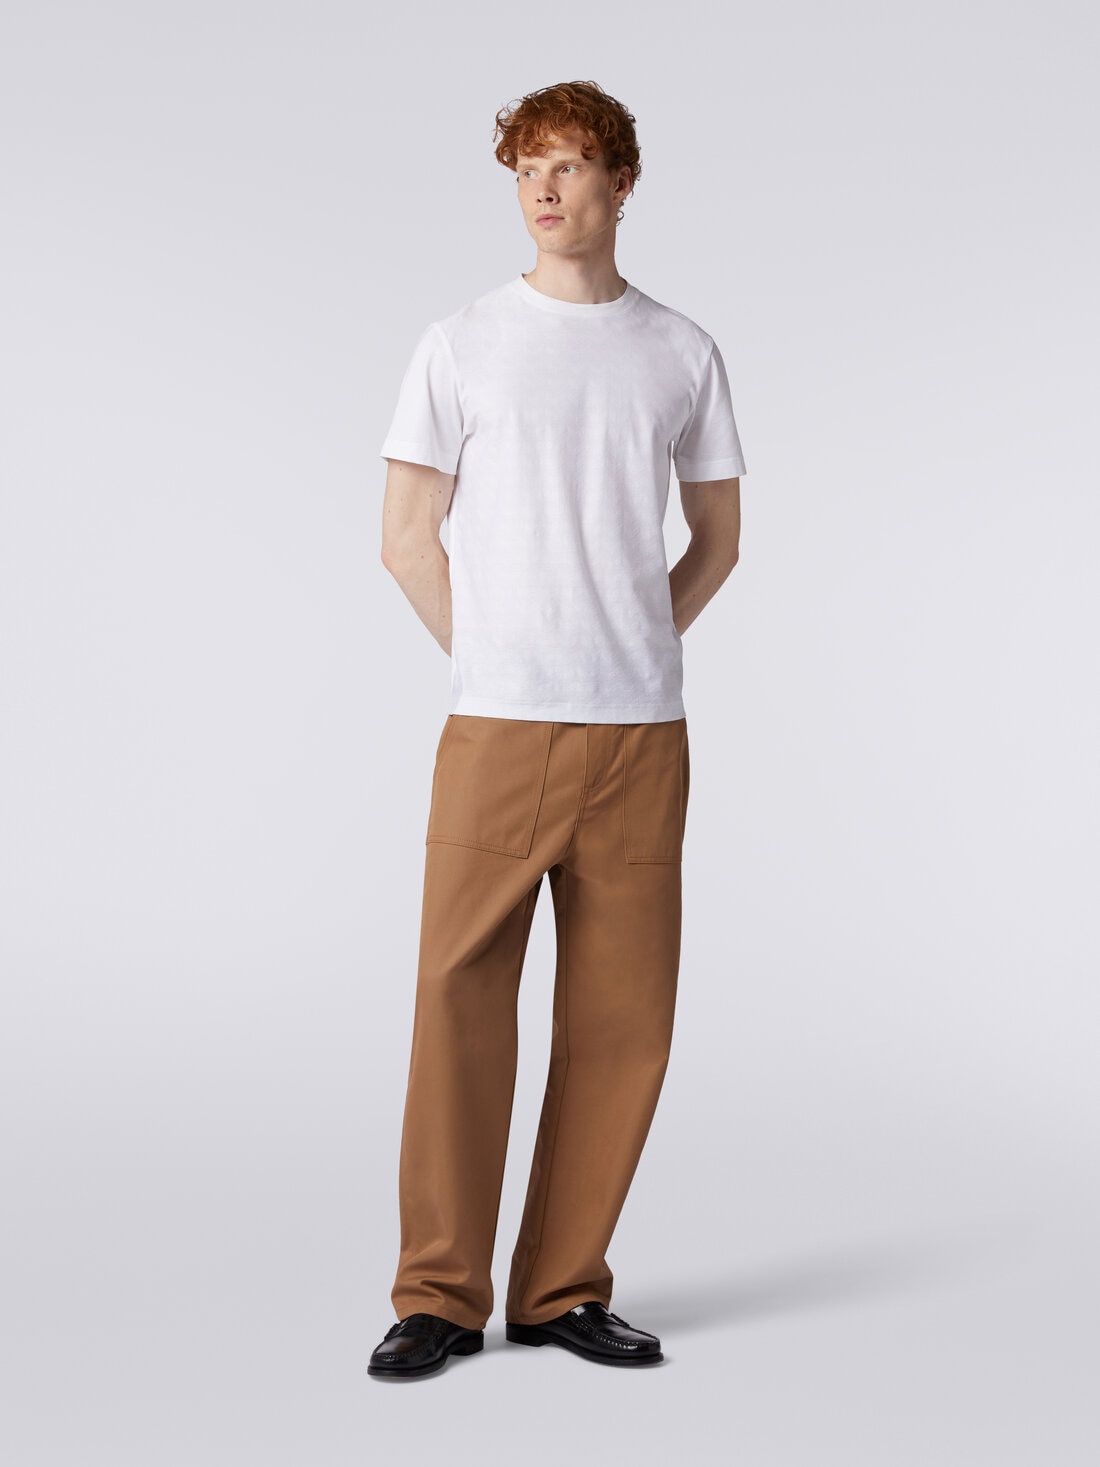 Short-sleeved T-shirt in zigzag cotton, White  - US24SL0CBJ00B4S01BI - 1